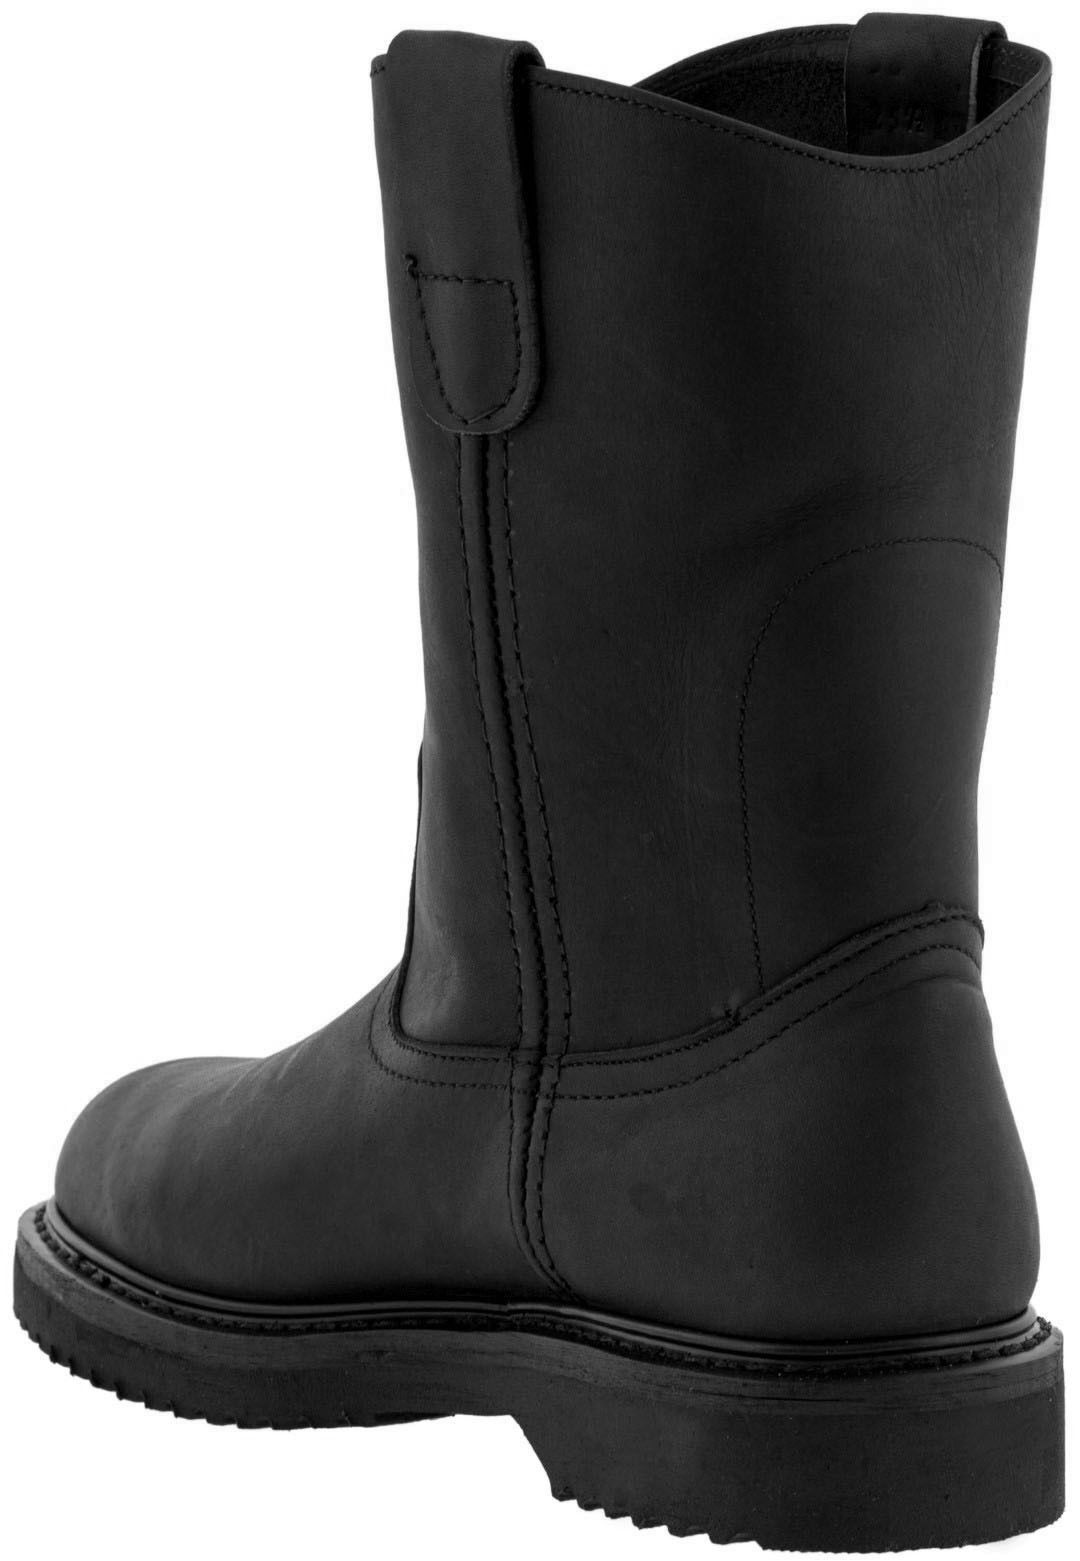 Mens Black Leather Tough Work Boots Oil Resistant Rubber Soles - Boots